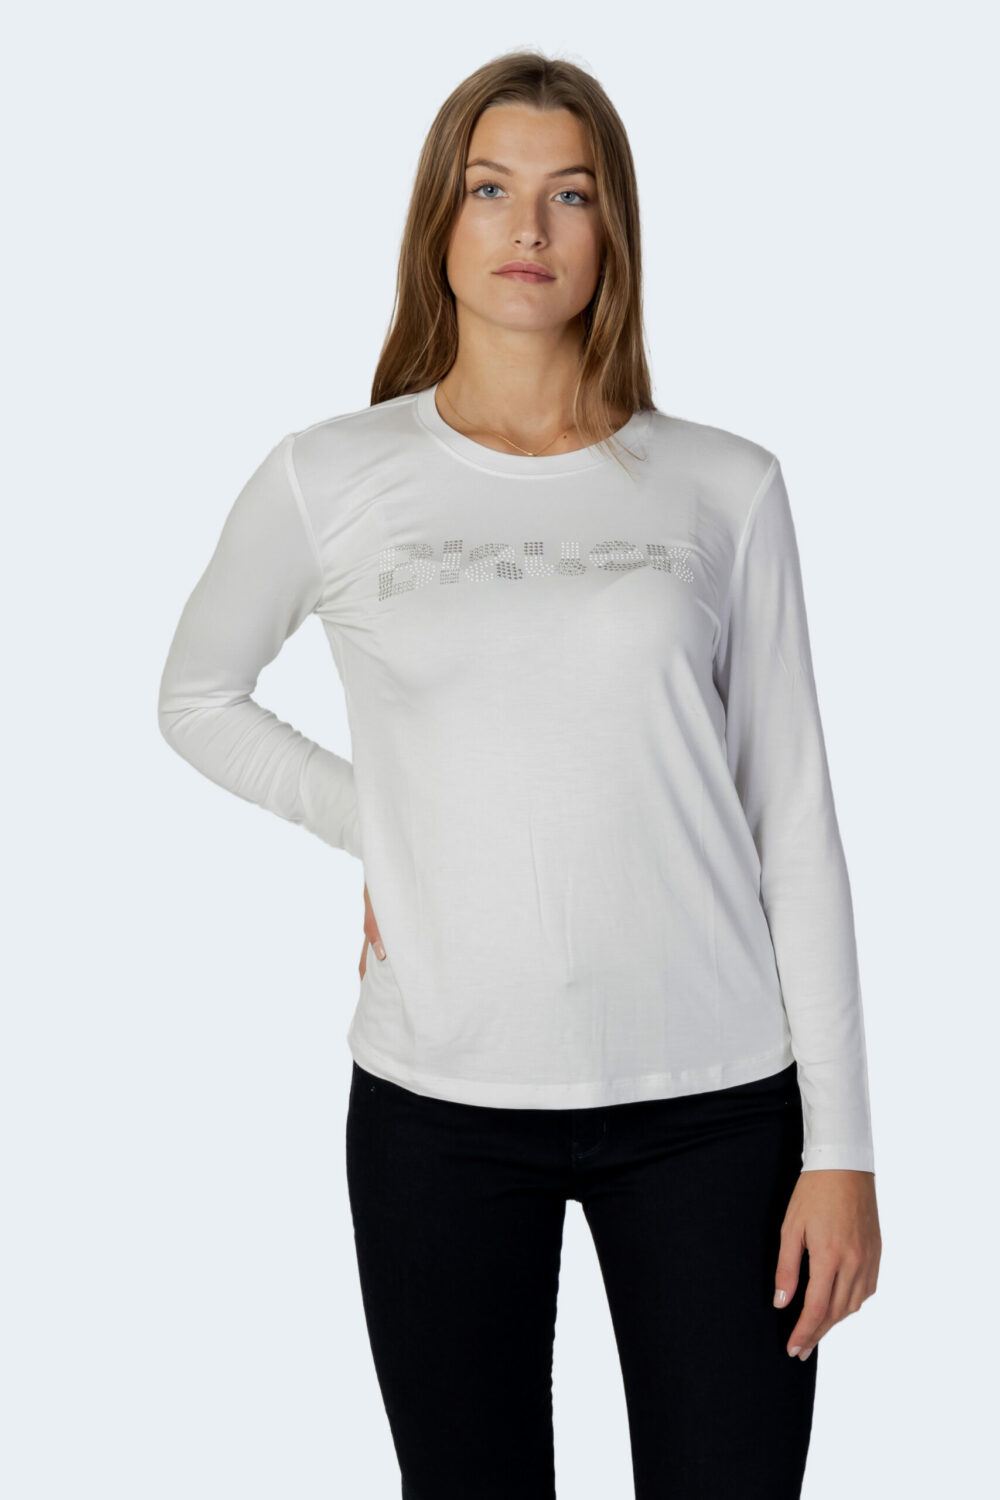 T-shirt manica lunga Blauer. Bianco - Foto 1